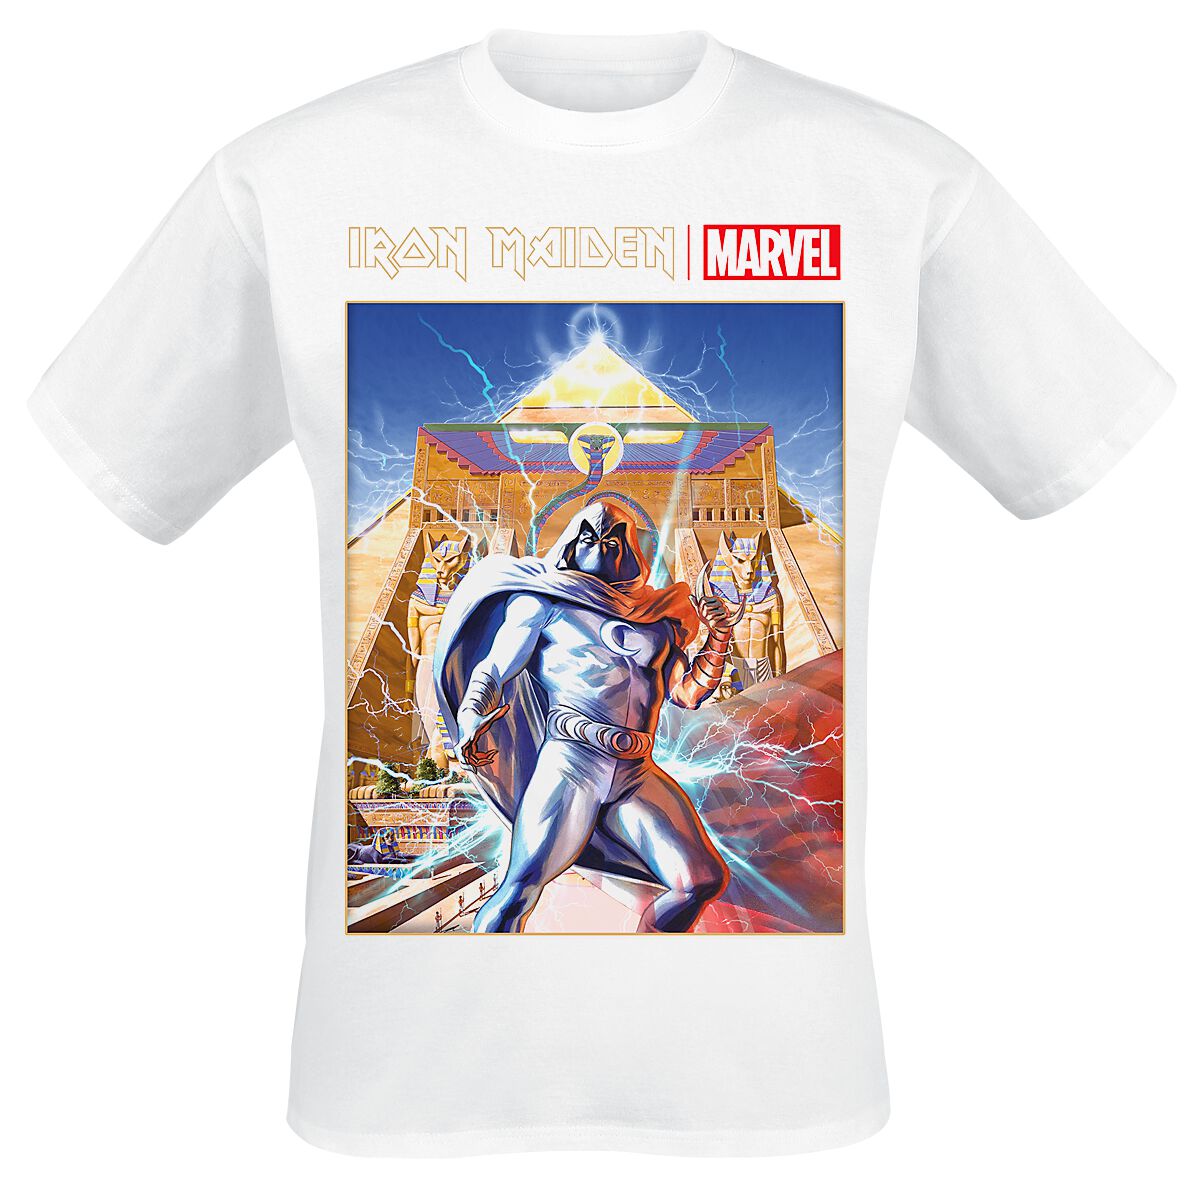 T-Shirt Manches courtes de Iron Maiden - Iron Maiden x Marvel Collection - Moon Knight - M à XXL - p